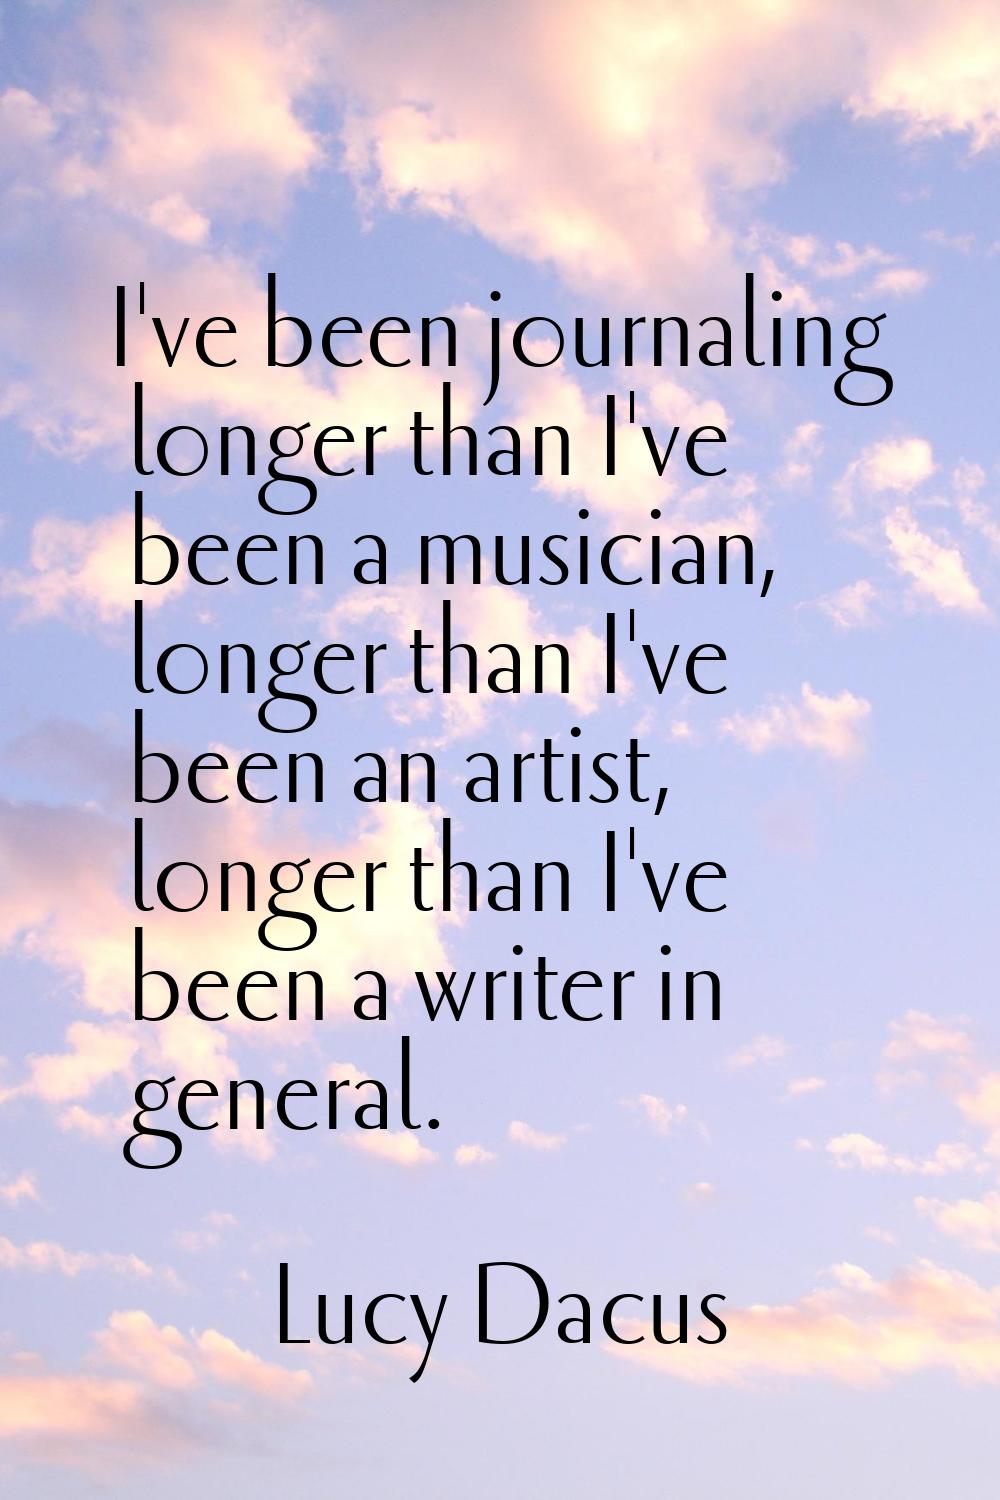 I've been journaling longer than I've been a musician, longer than I've been an artist, longer than